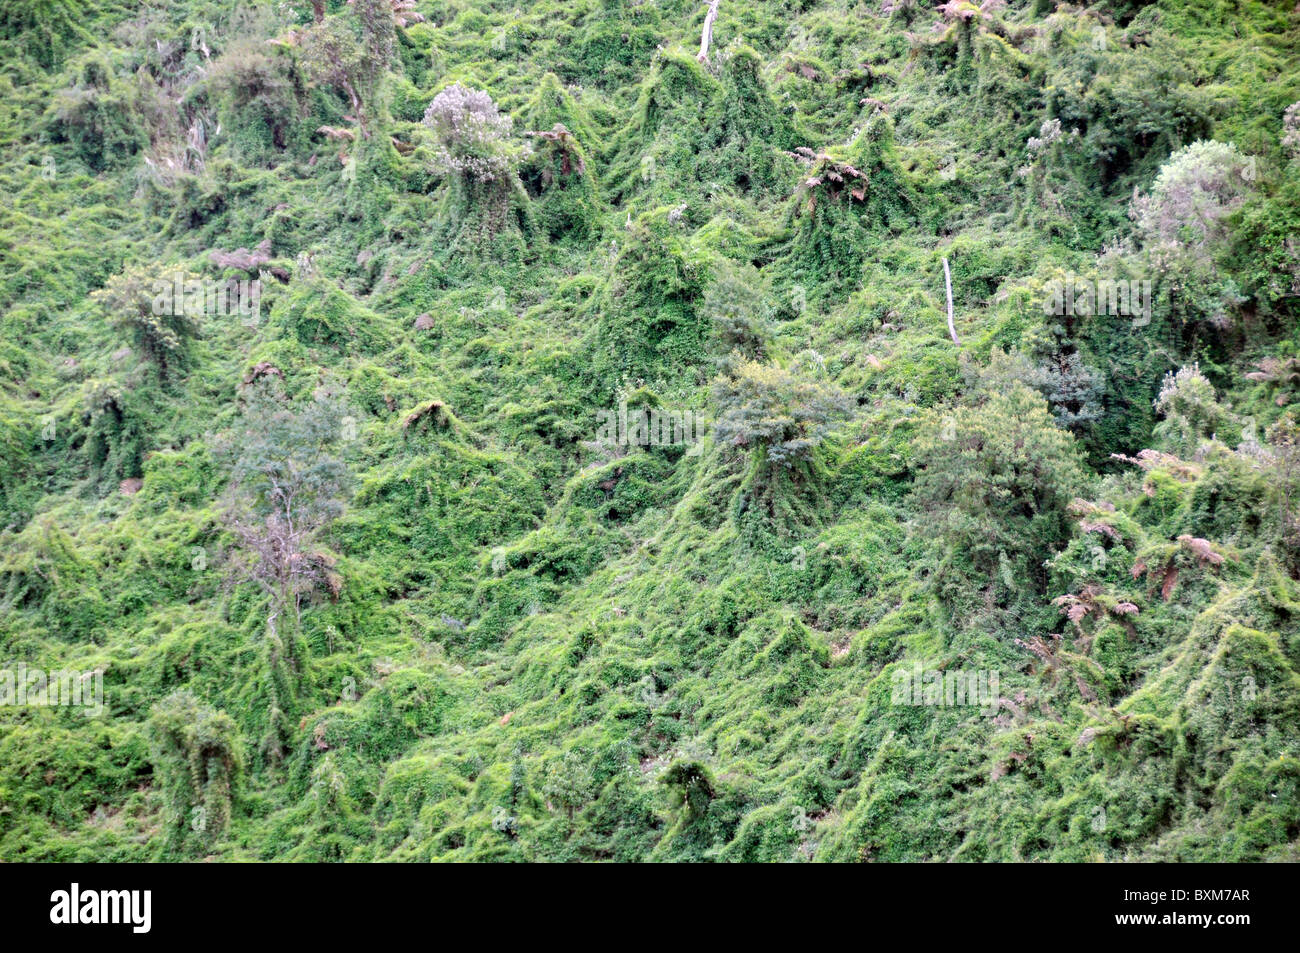 Lush vegetation, near the border between Rio Grande do Sul and Santa Catarina, Brazil Stock Photo